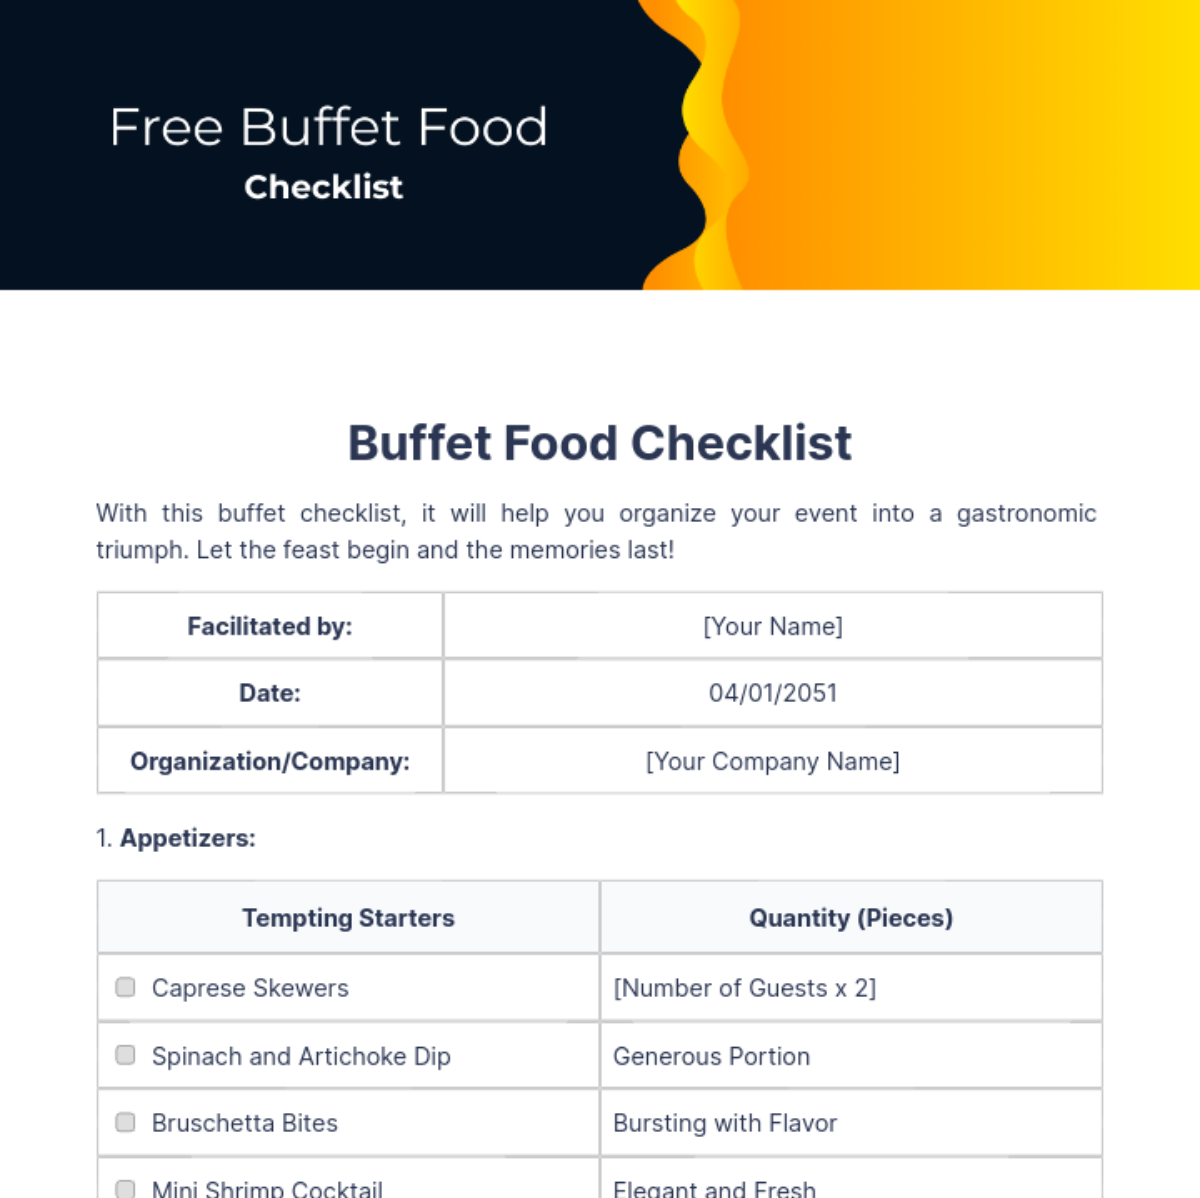 Free Buffet Food Checklist Template